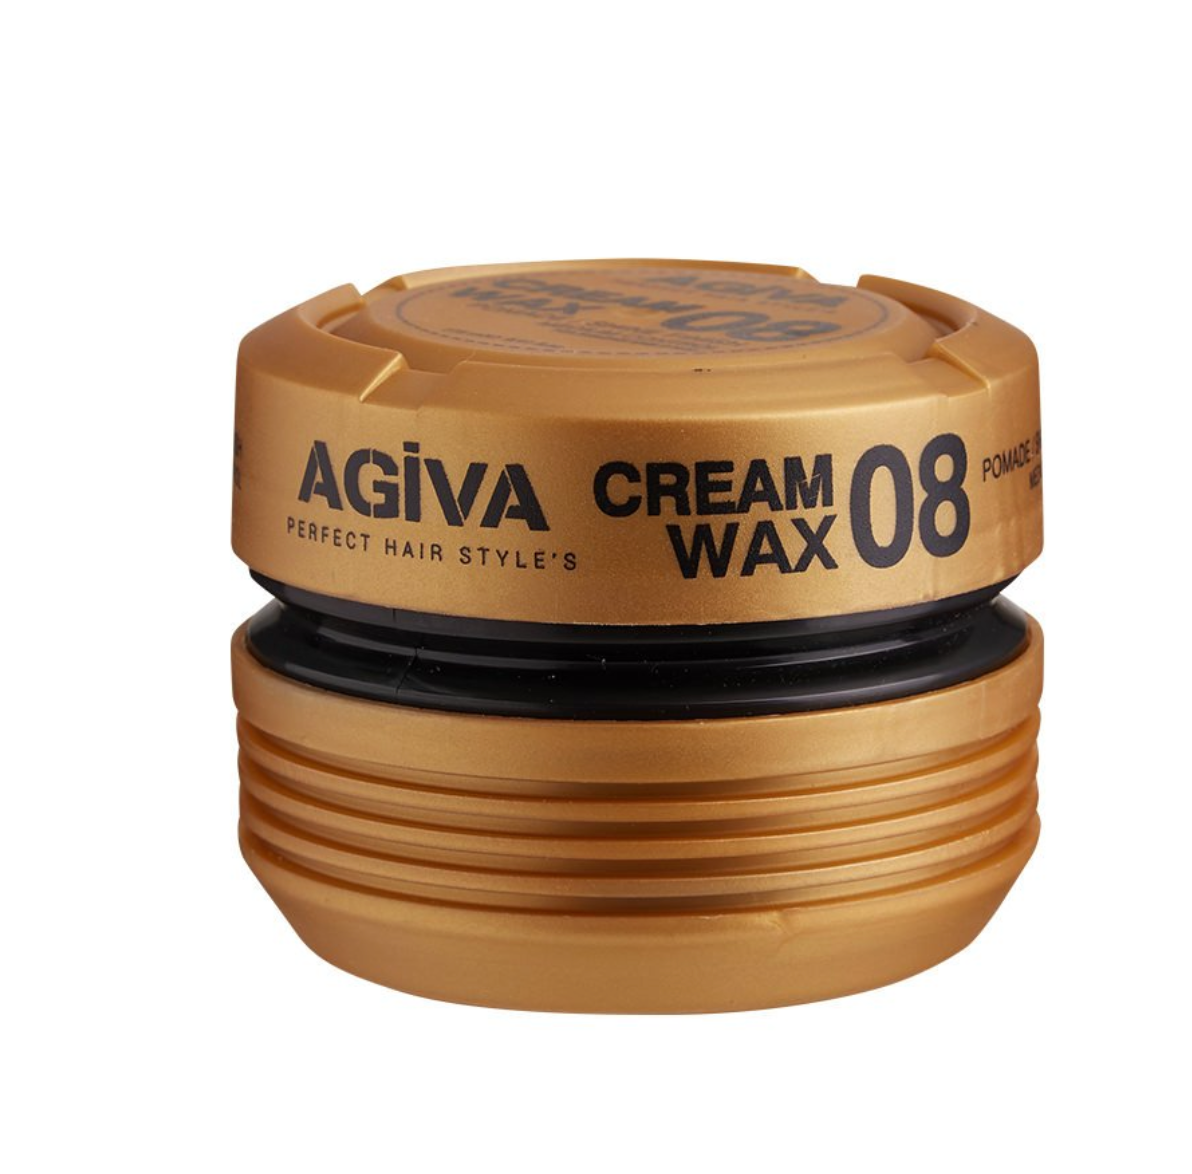 Agiva cream wax 08 pomade/shine finish 175ml